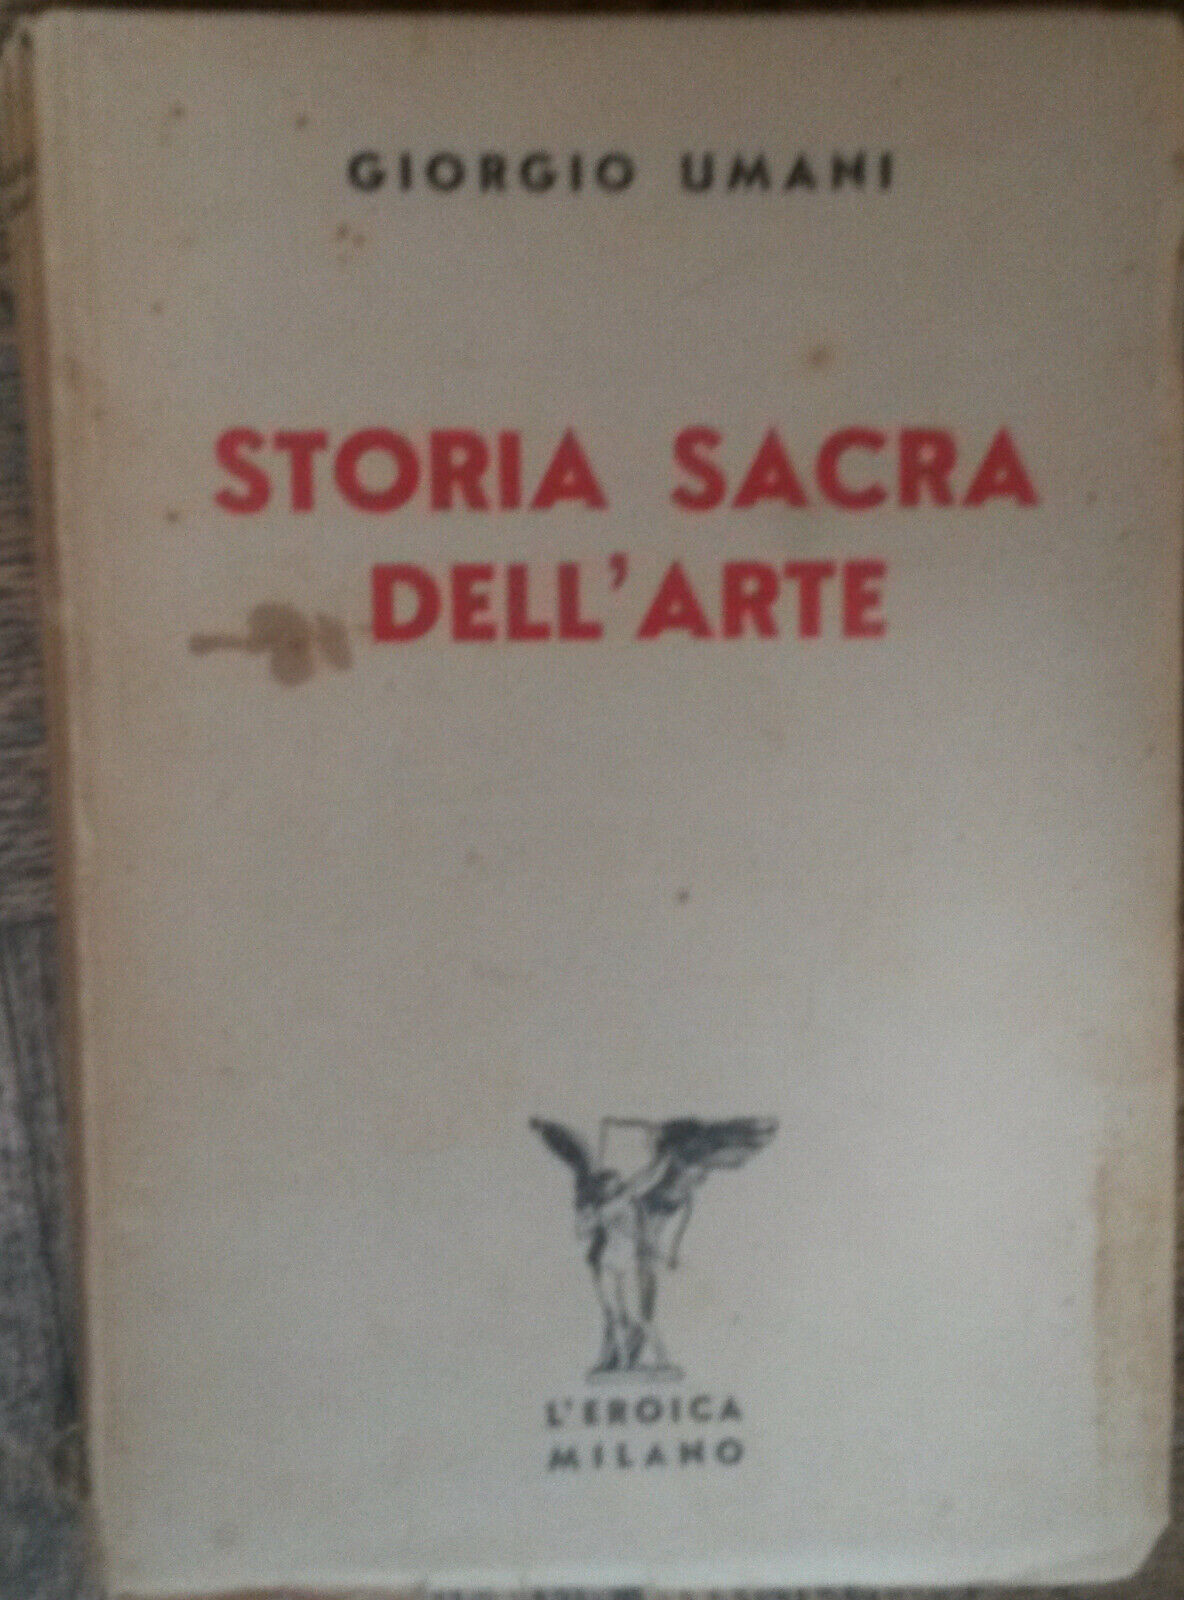 Storia sacra delL'arte - Giorgio Umani - L'Eroica,1937 - R